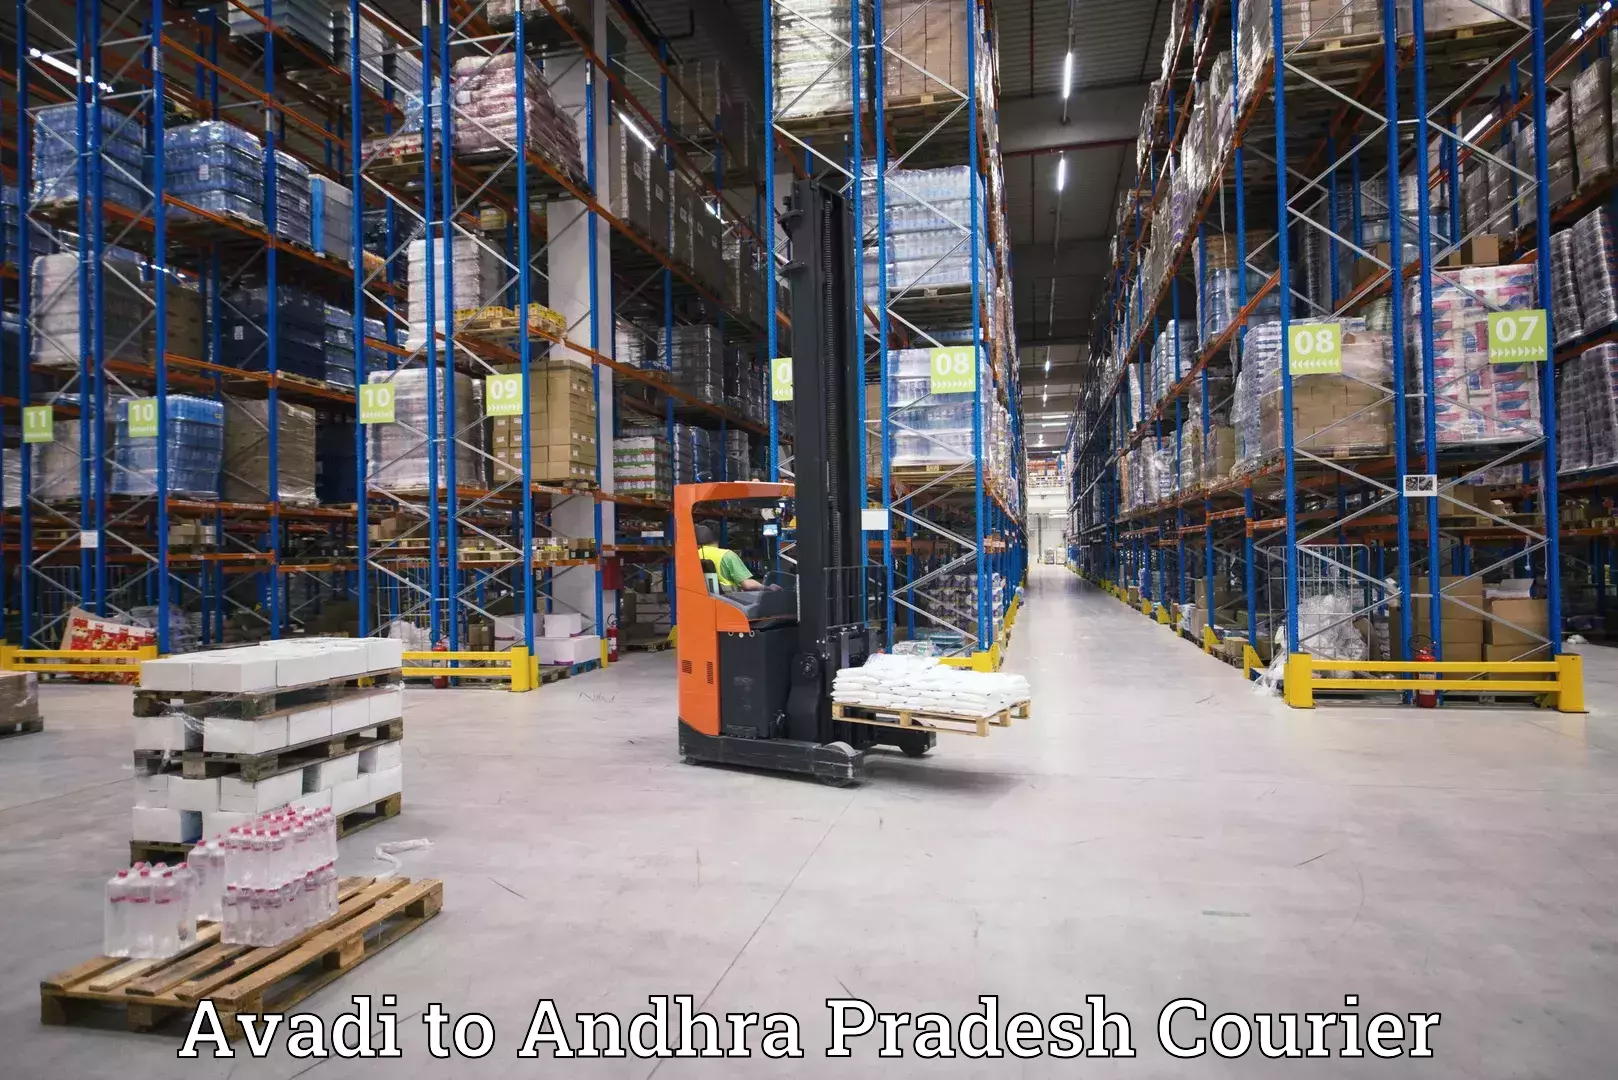 Courier service partnerships Avadi to Andhra Pradesh